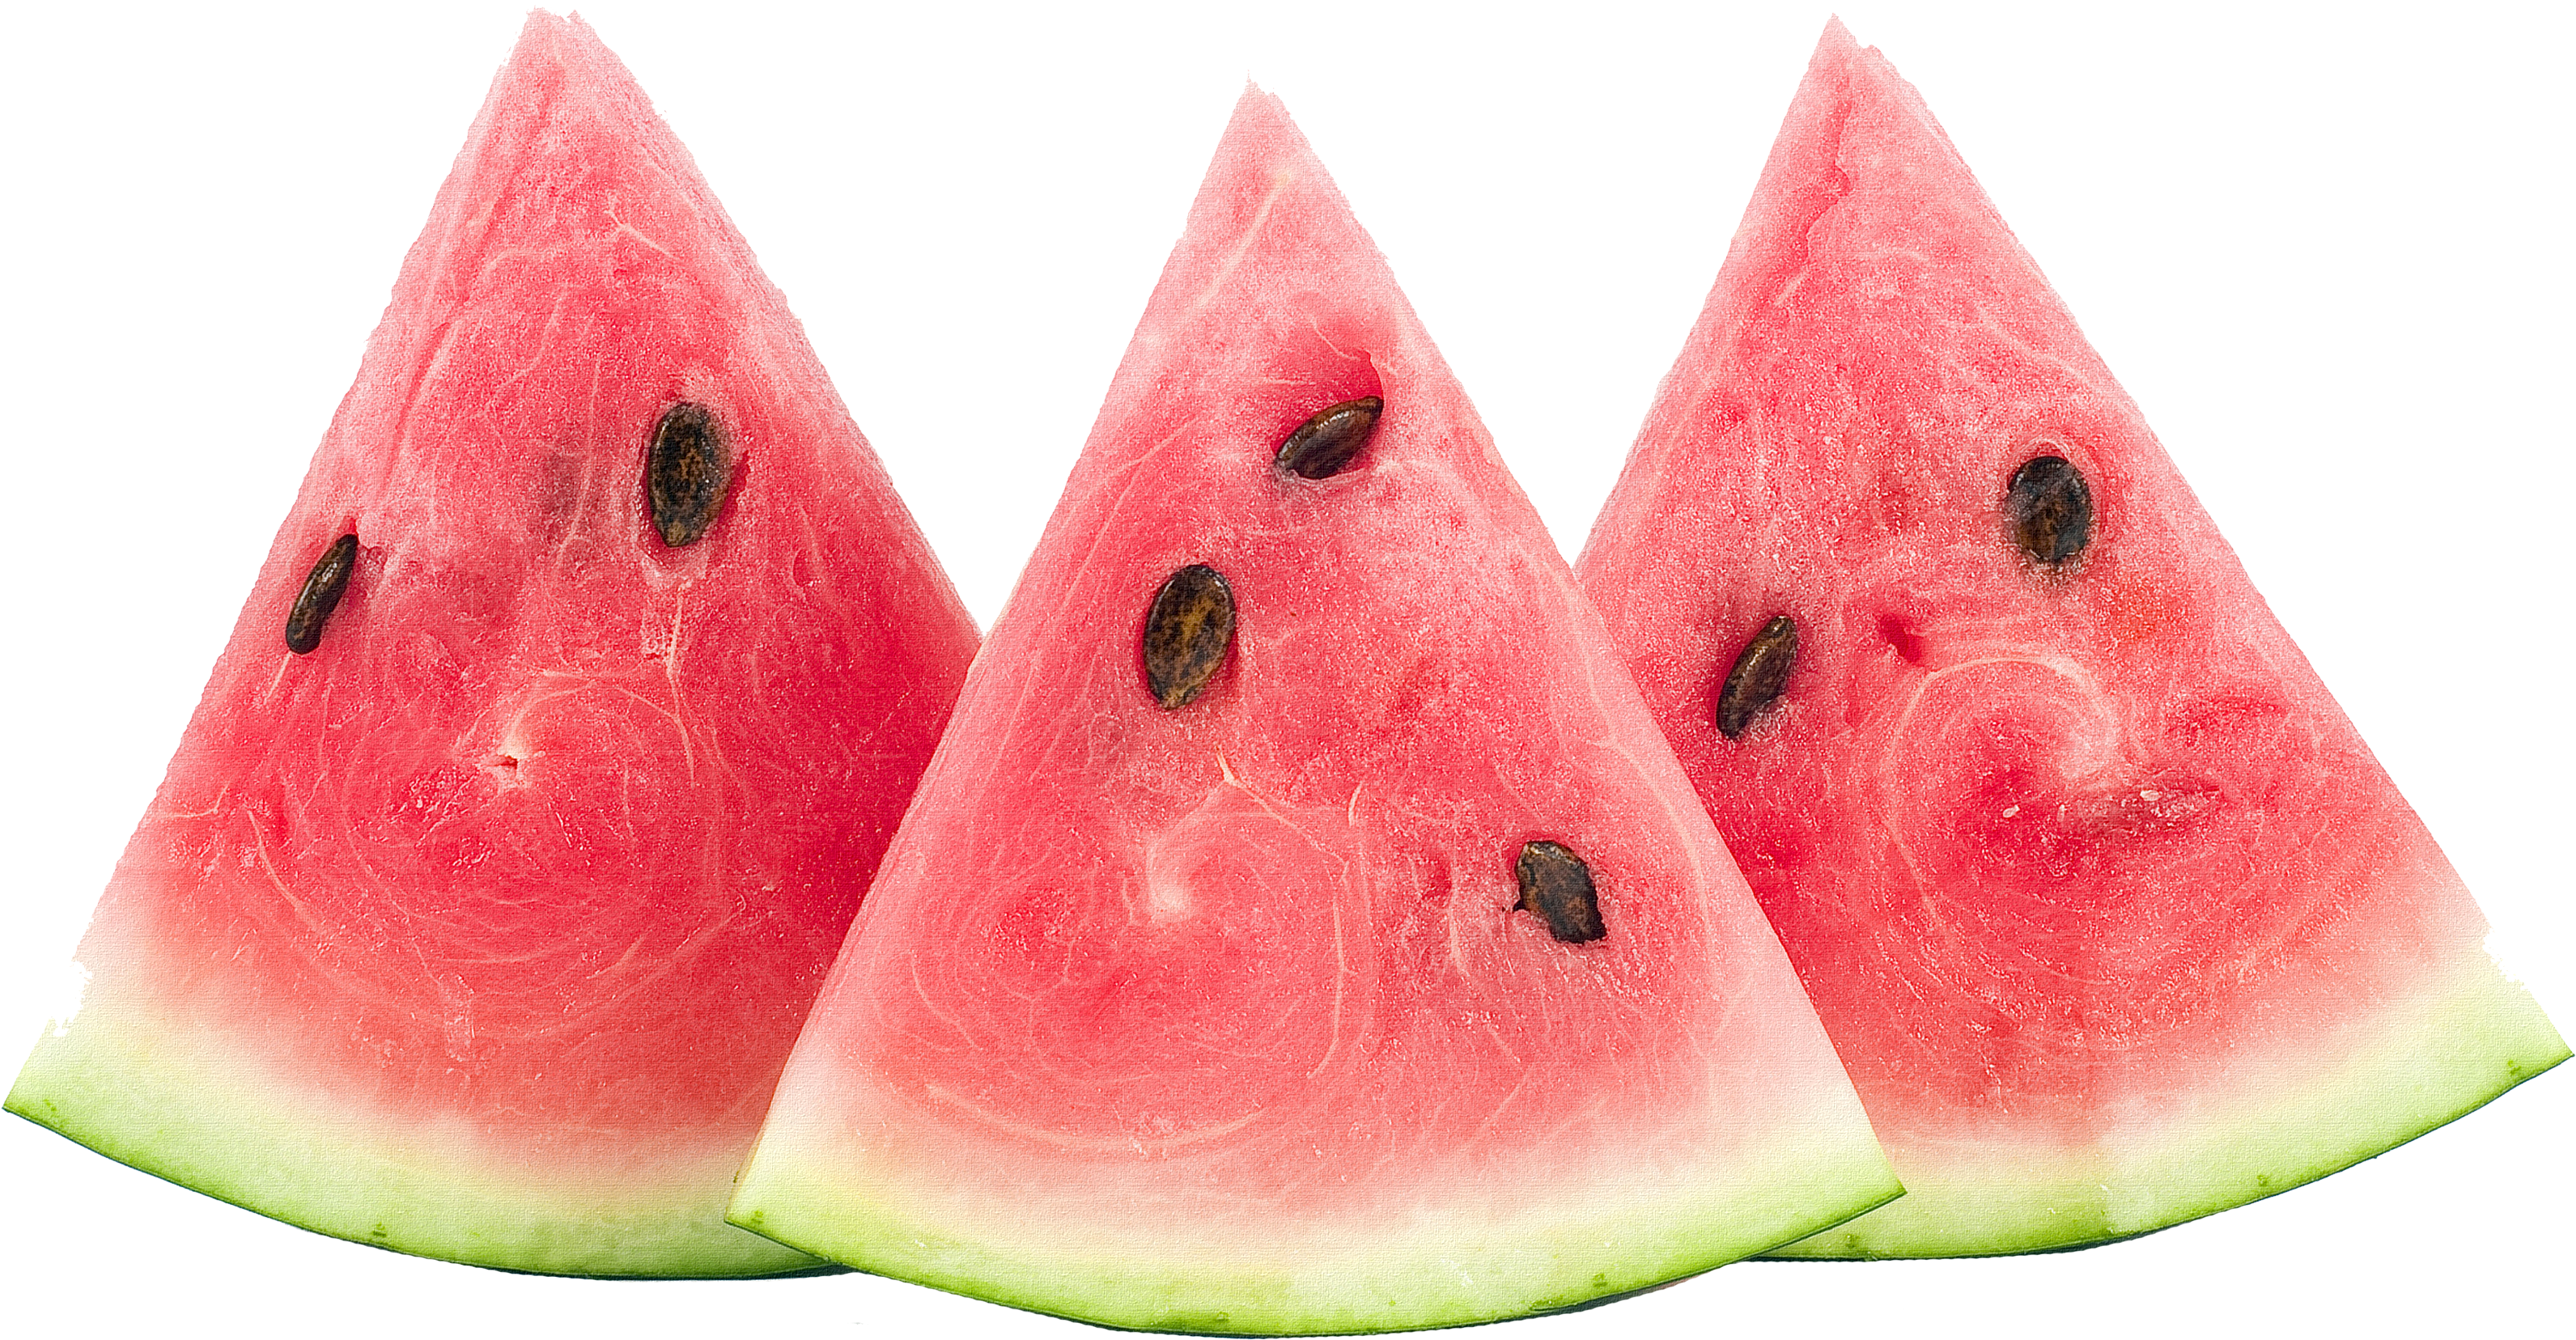 Watermelon Slice Png 3307 X 2017 , 8382 К - Watermelon (3307x2017)